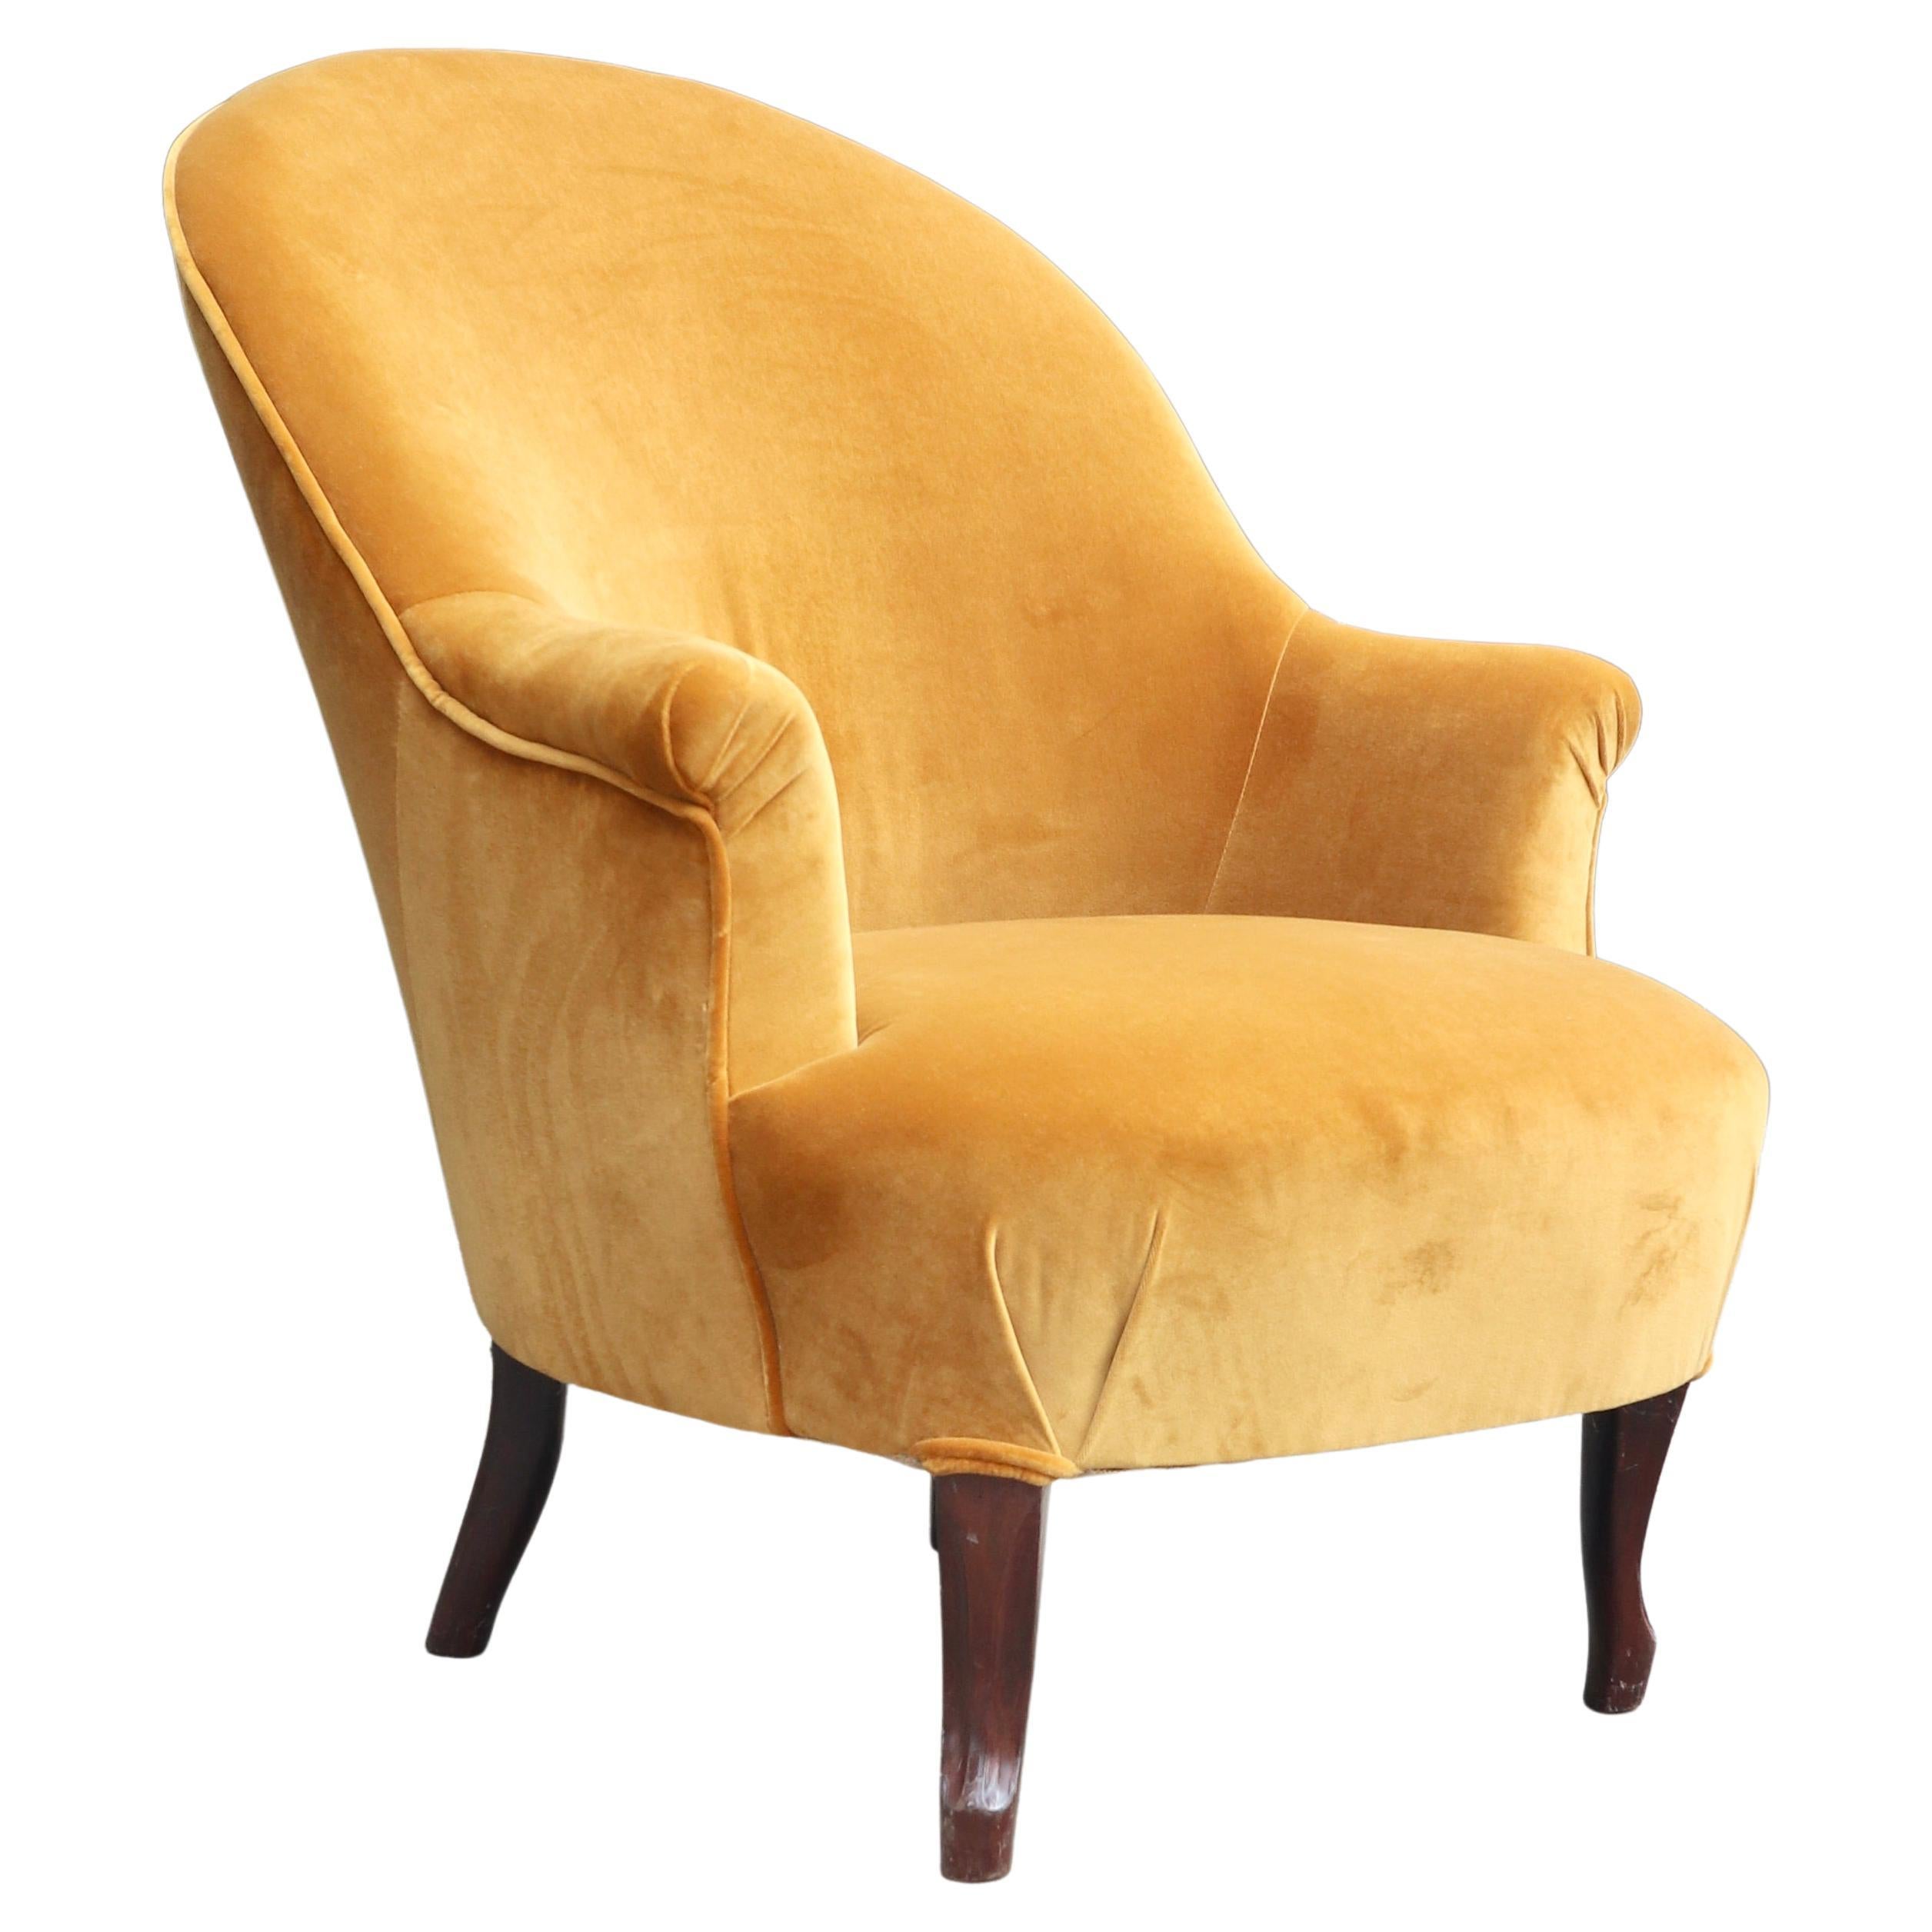 Antique French 19th century Napoleon III crapaud armchair recovered in velvet